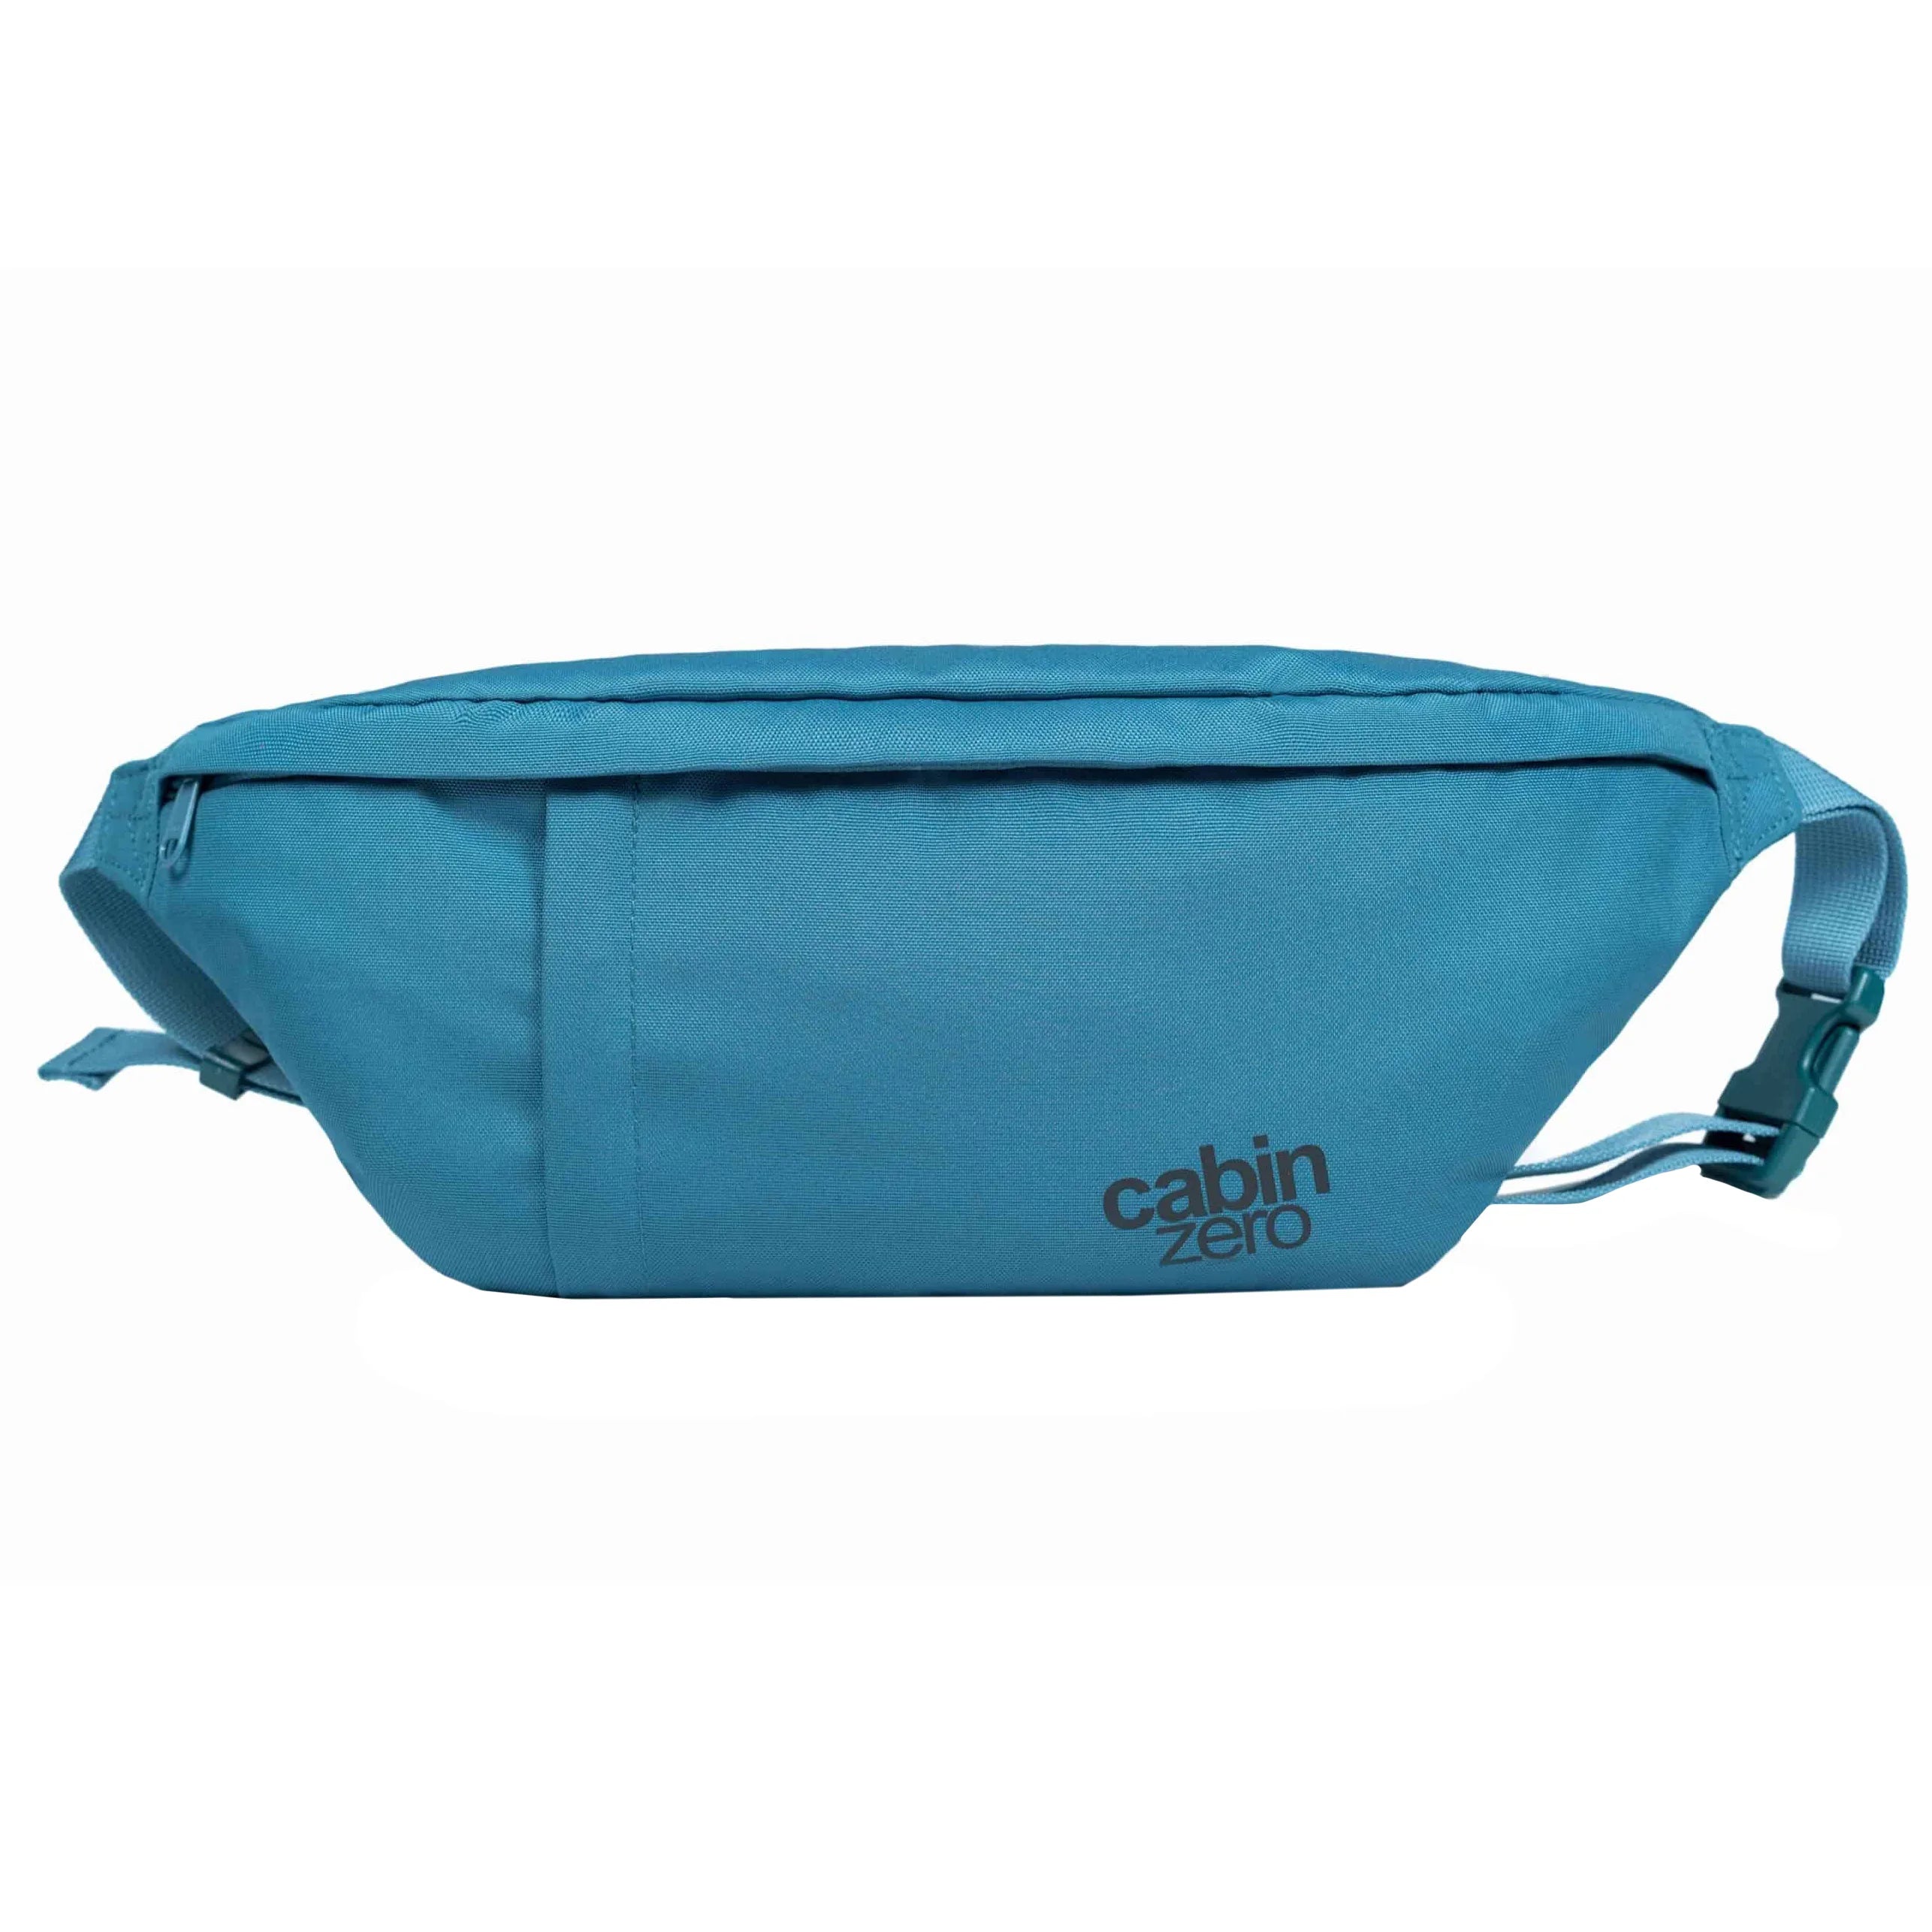 CabinZero Companion Bags Hip Pack 2L sac banane 41 cm - bleu aruba